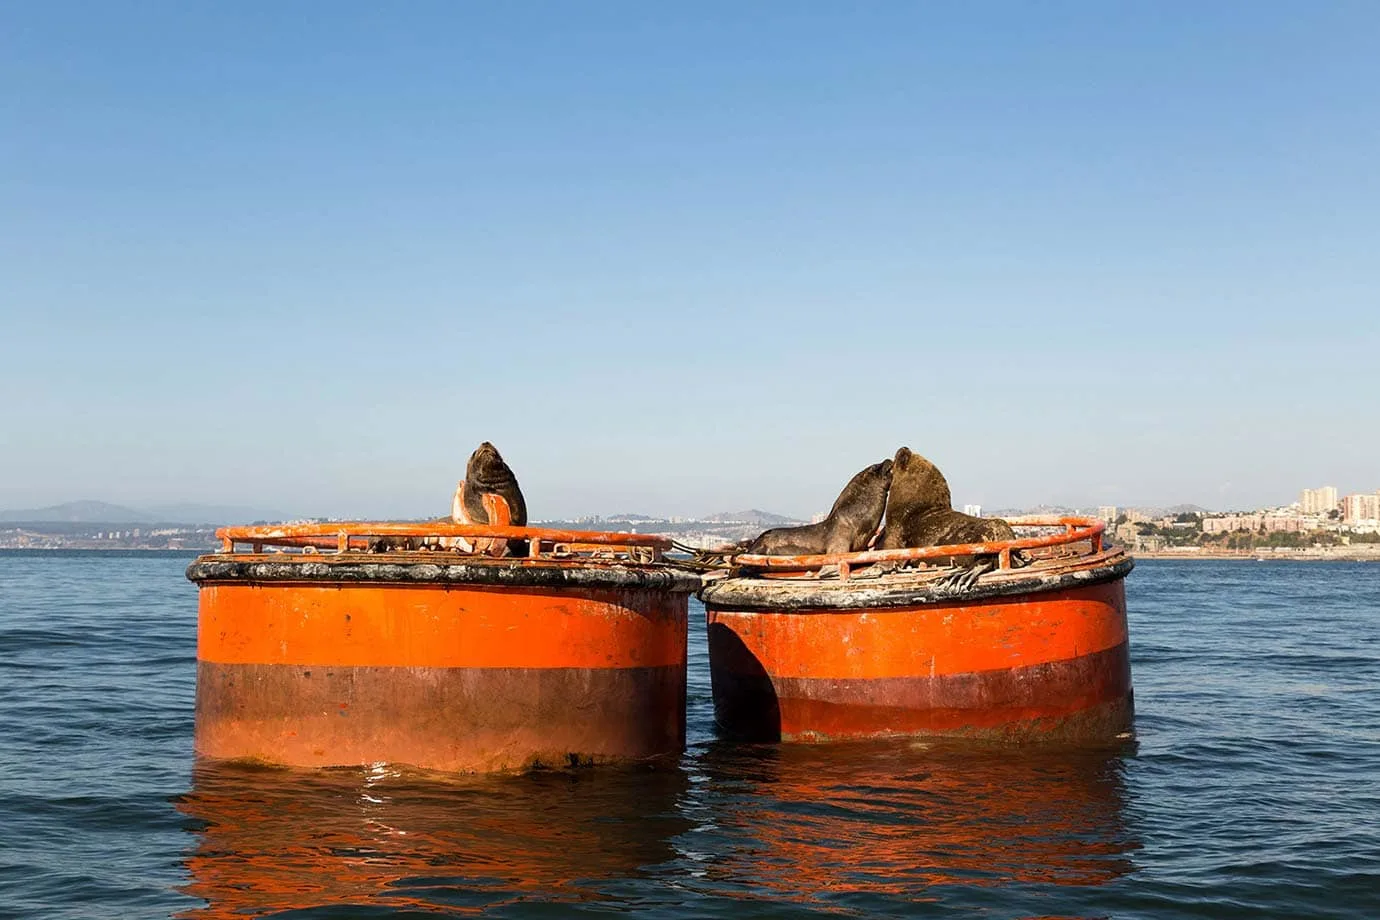 Sea lions in Valparaiso